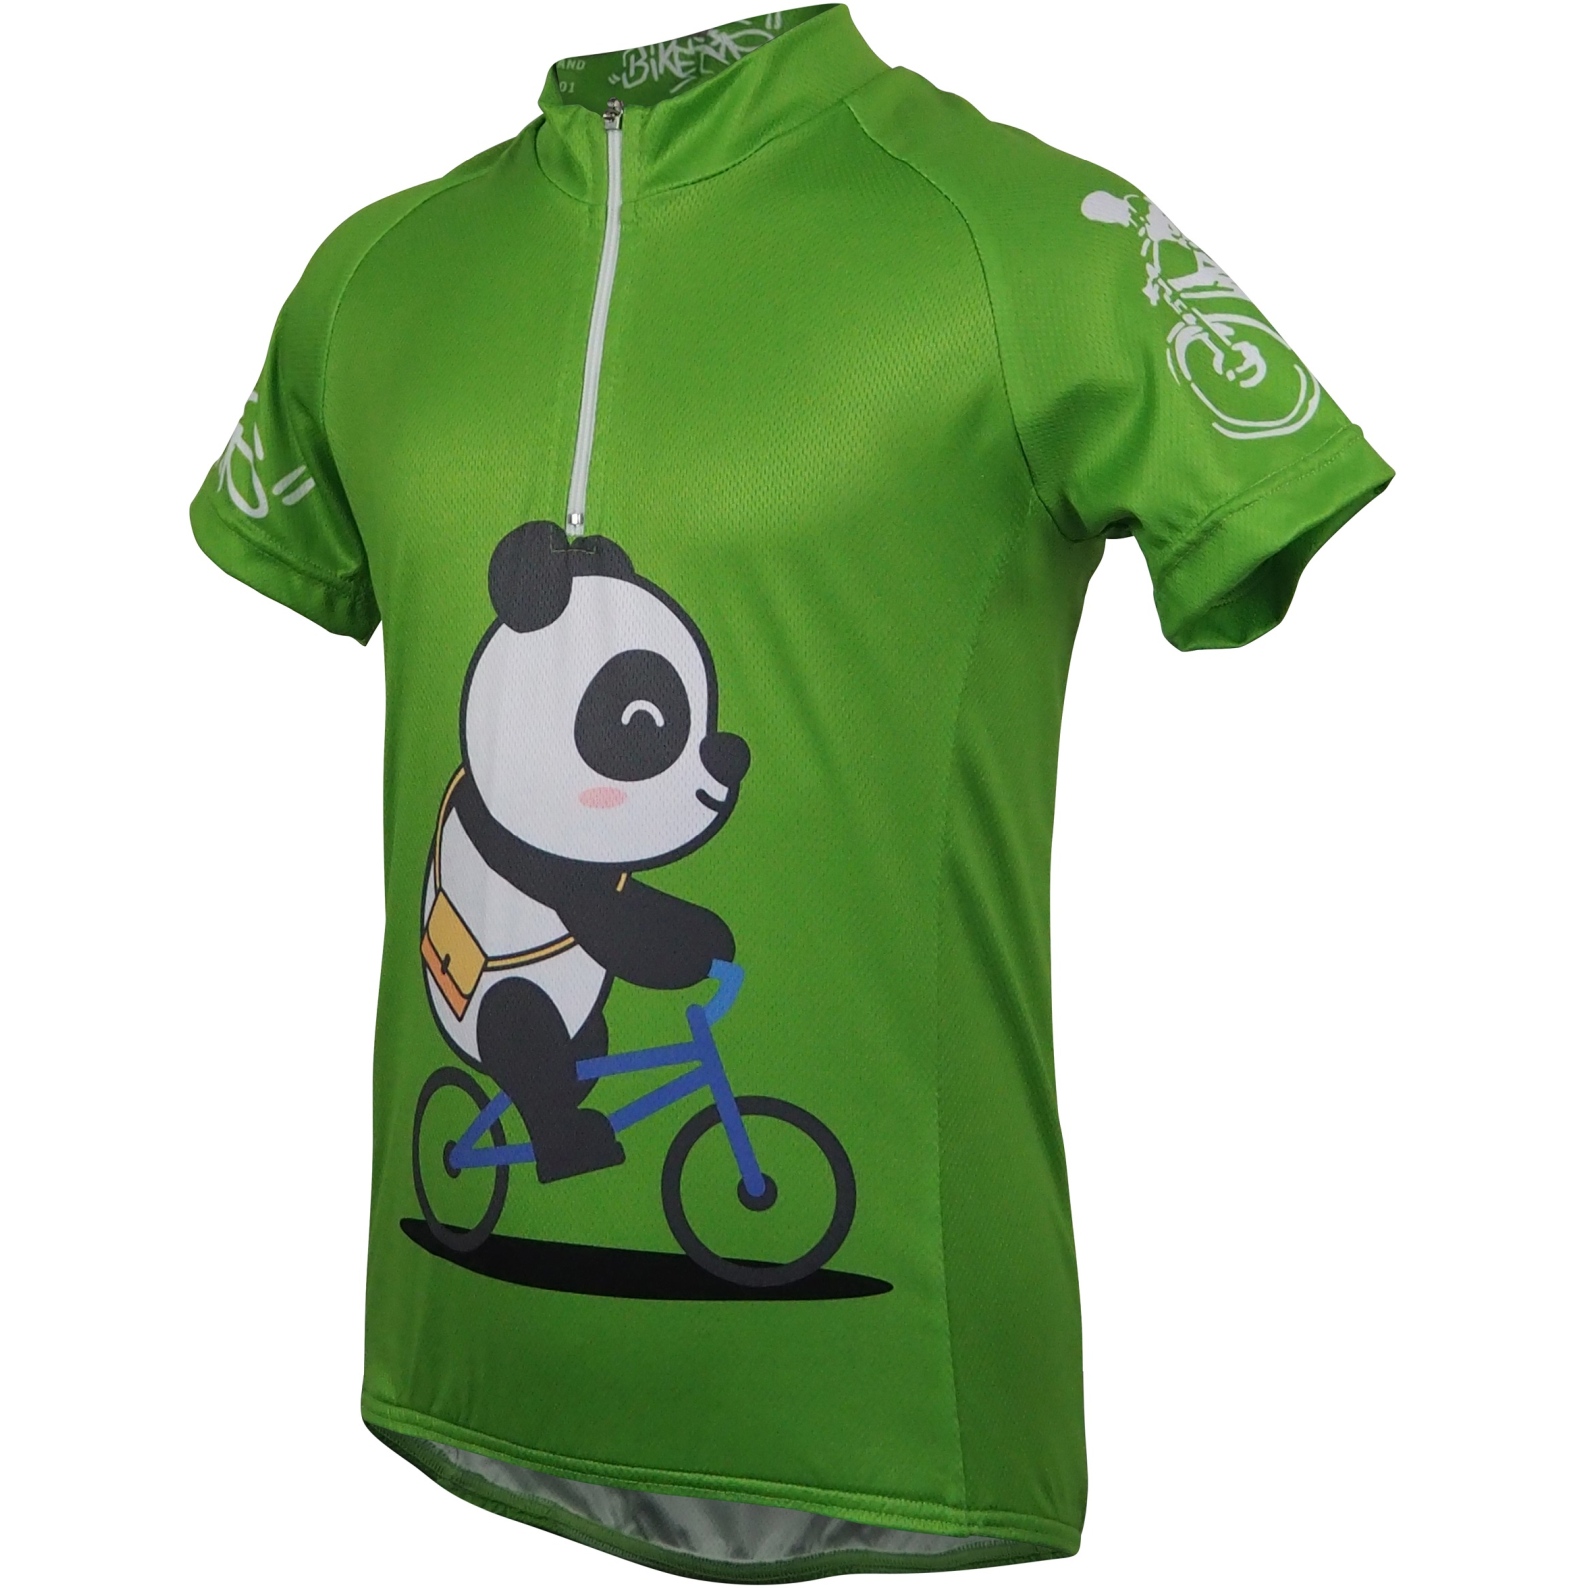 Productfoto van Biketags Cycling Jersey Kids - Panda Green